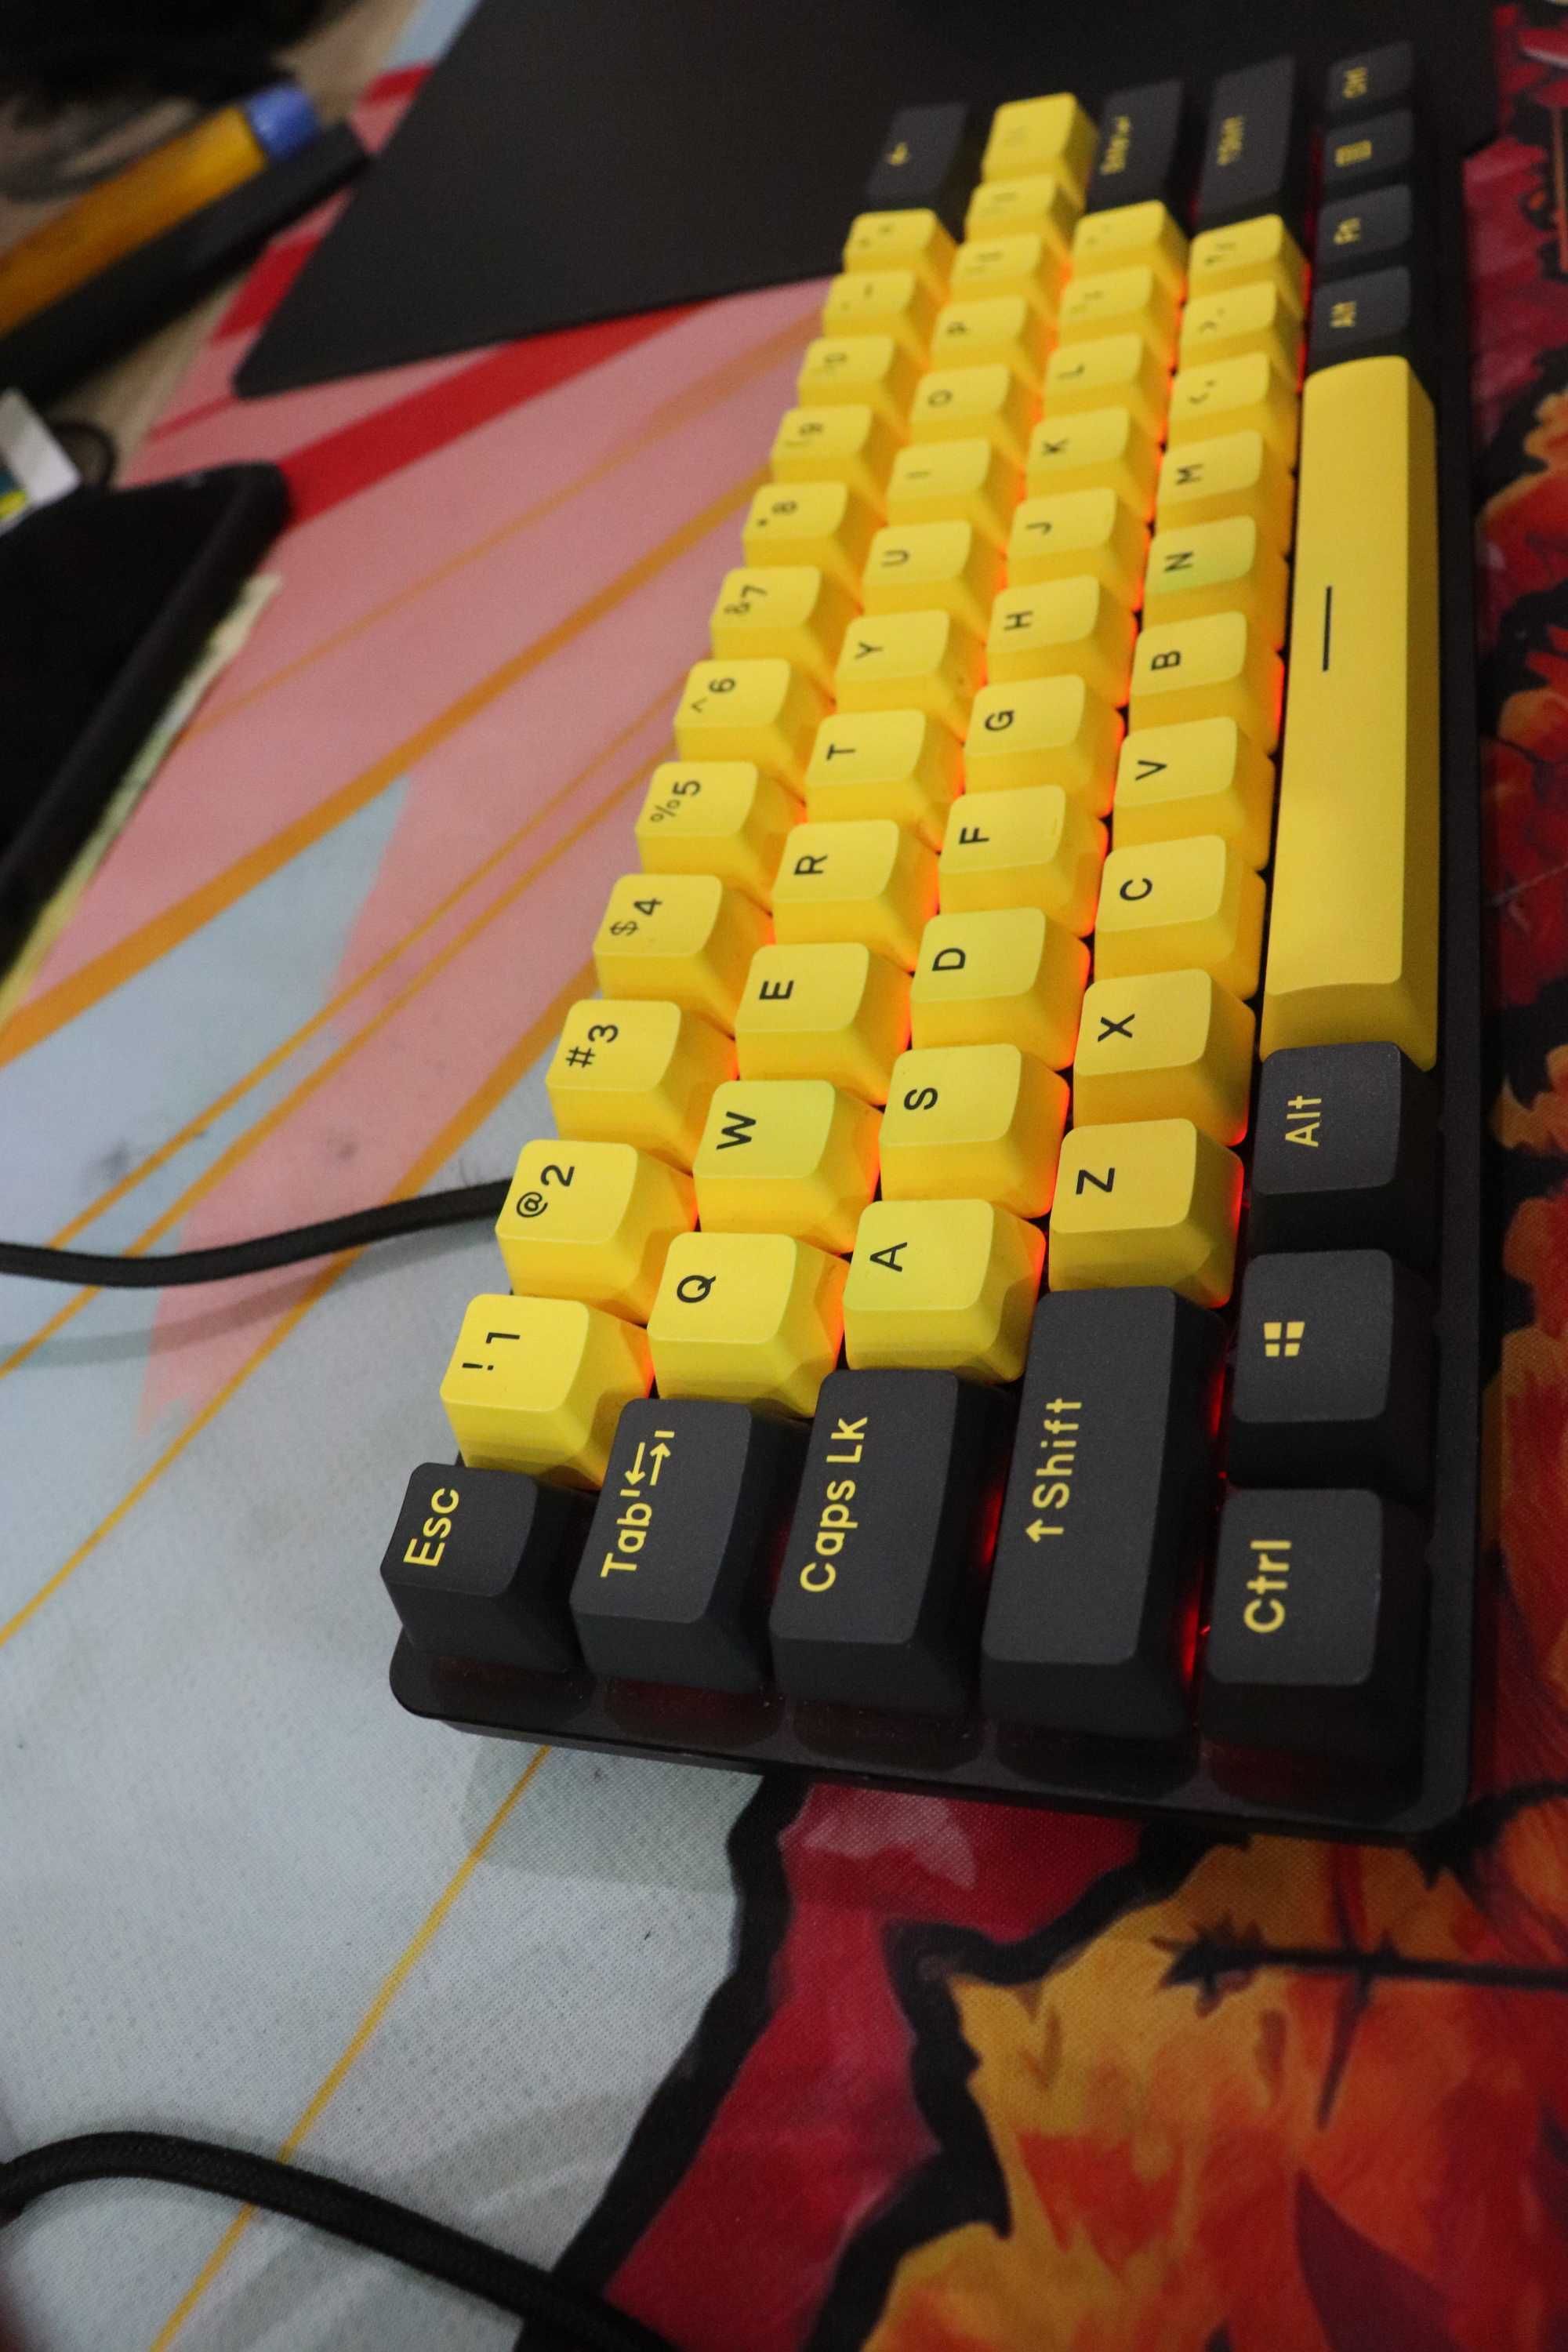 Vand tastatura gaming Razer Huntsman mini